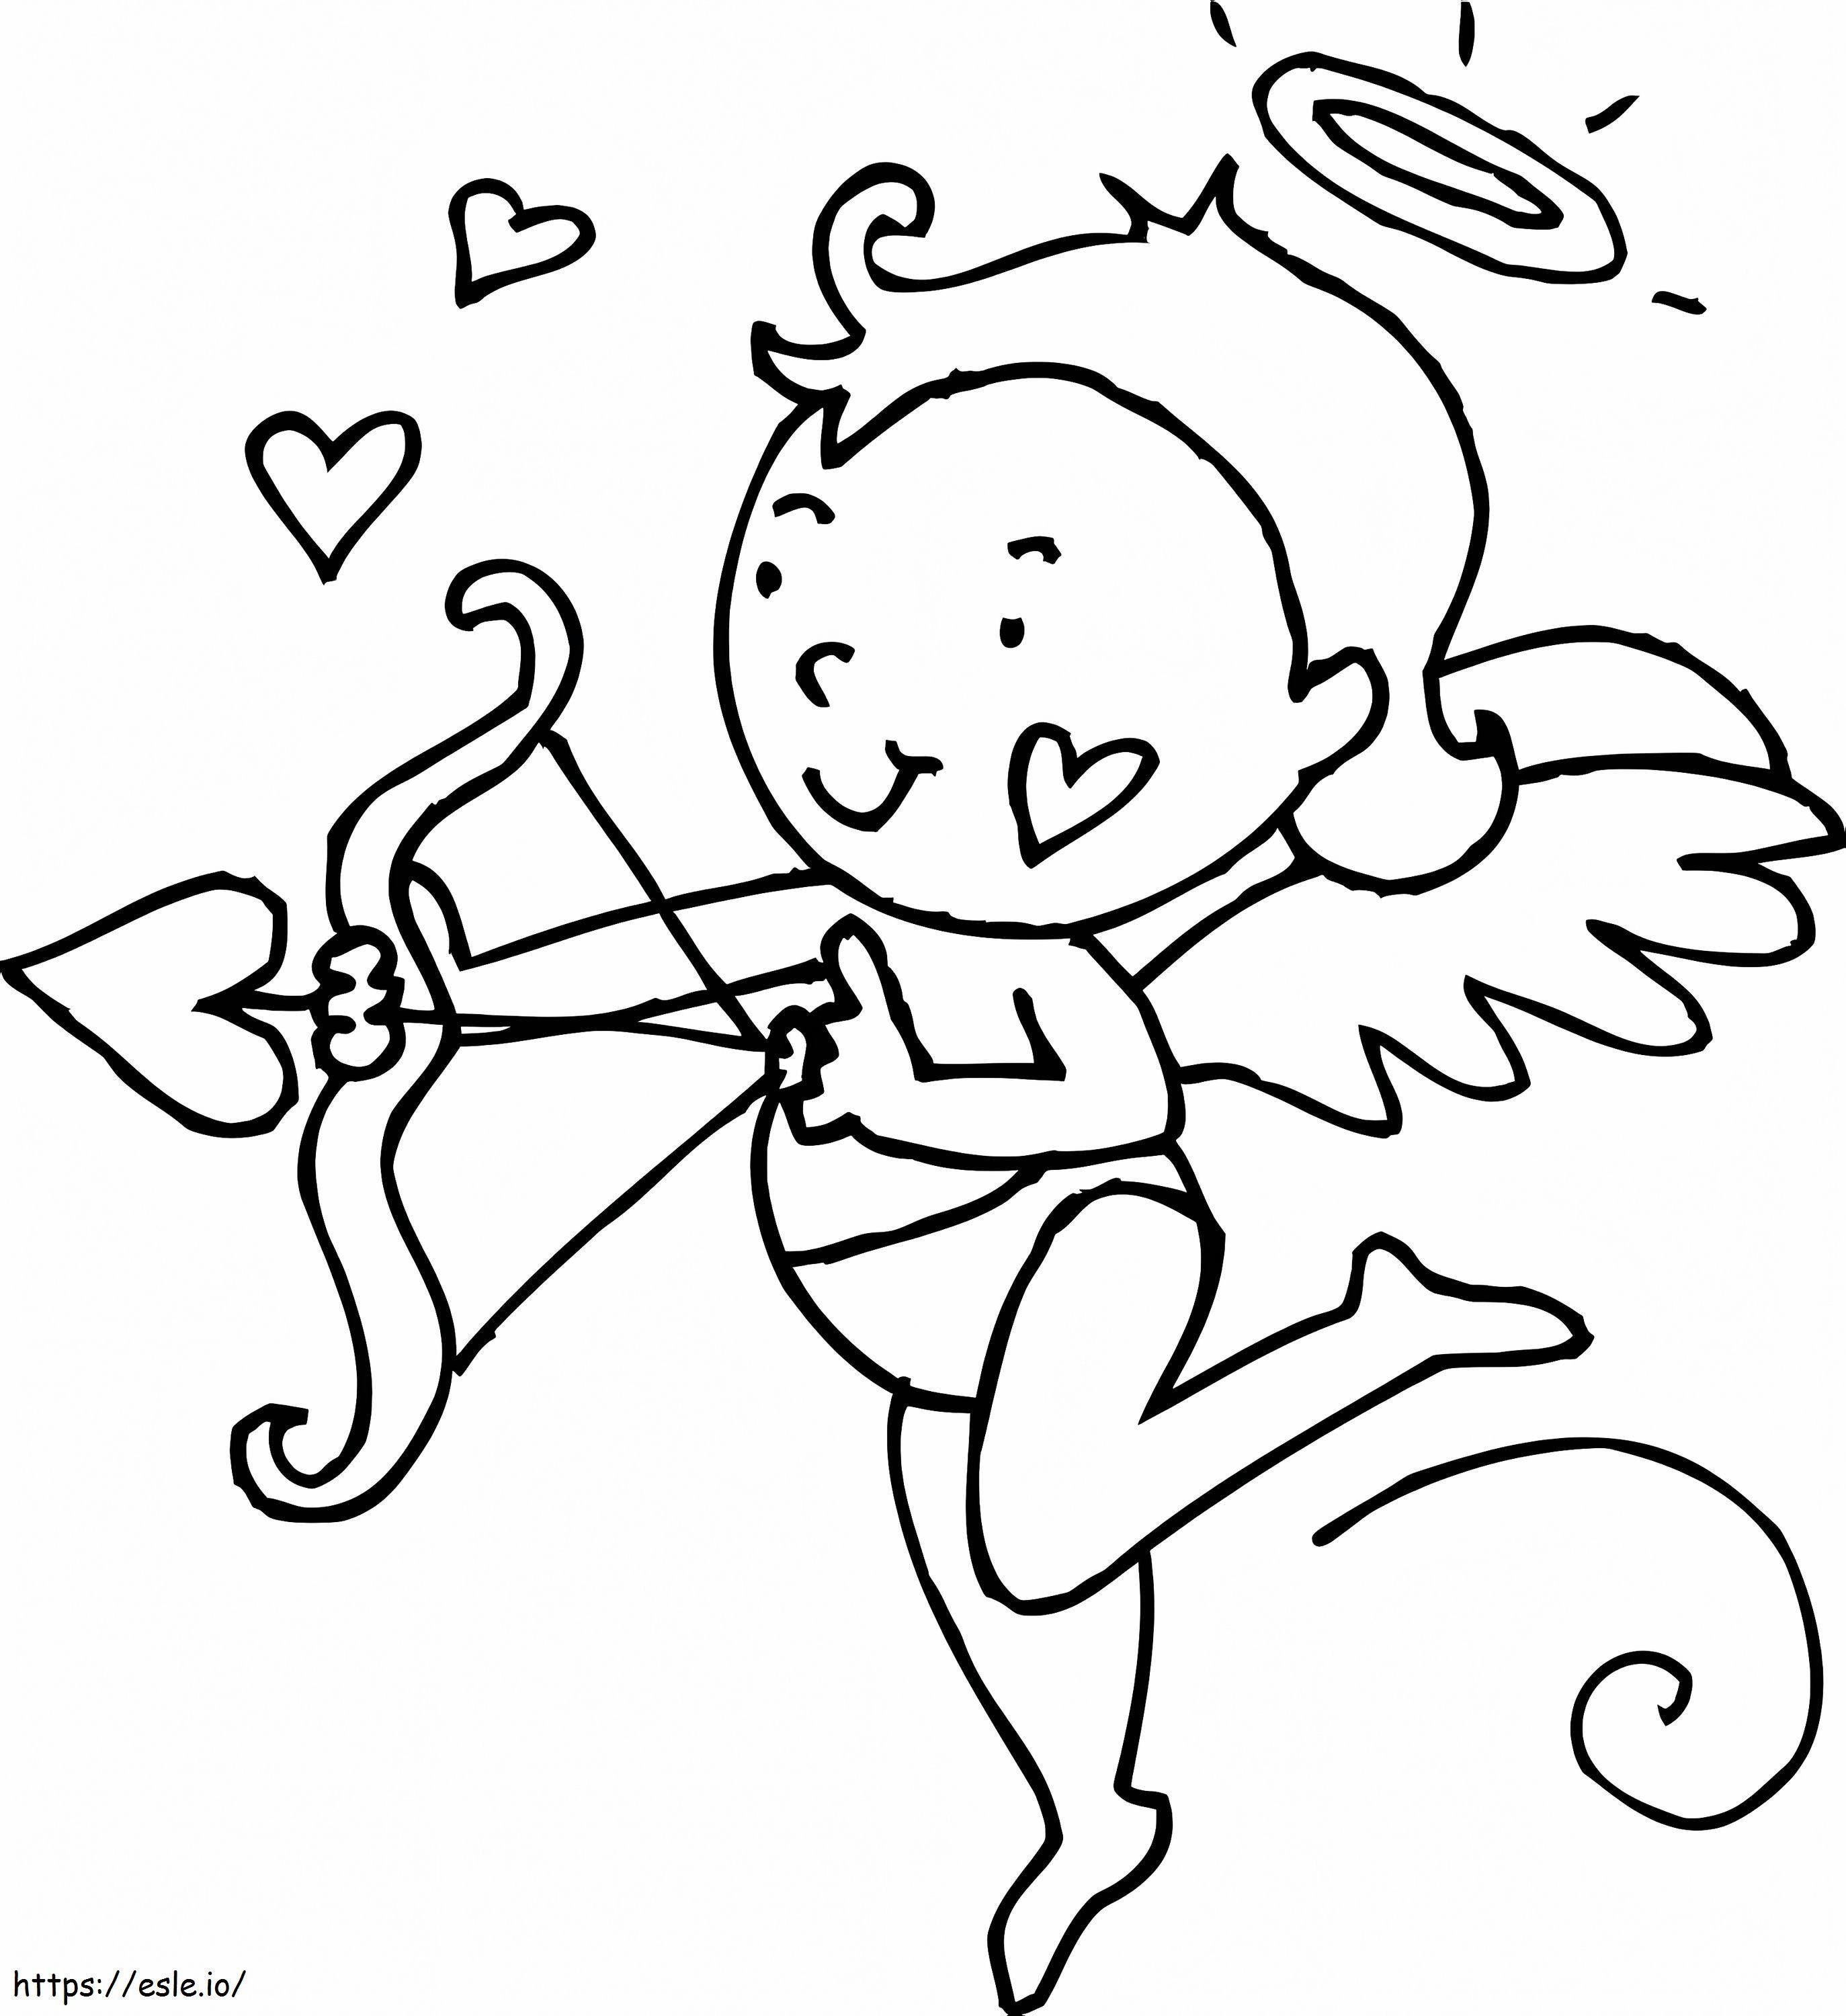 Desen Cupidon de colorat